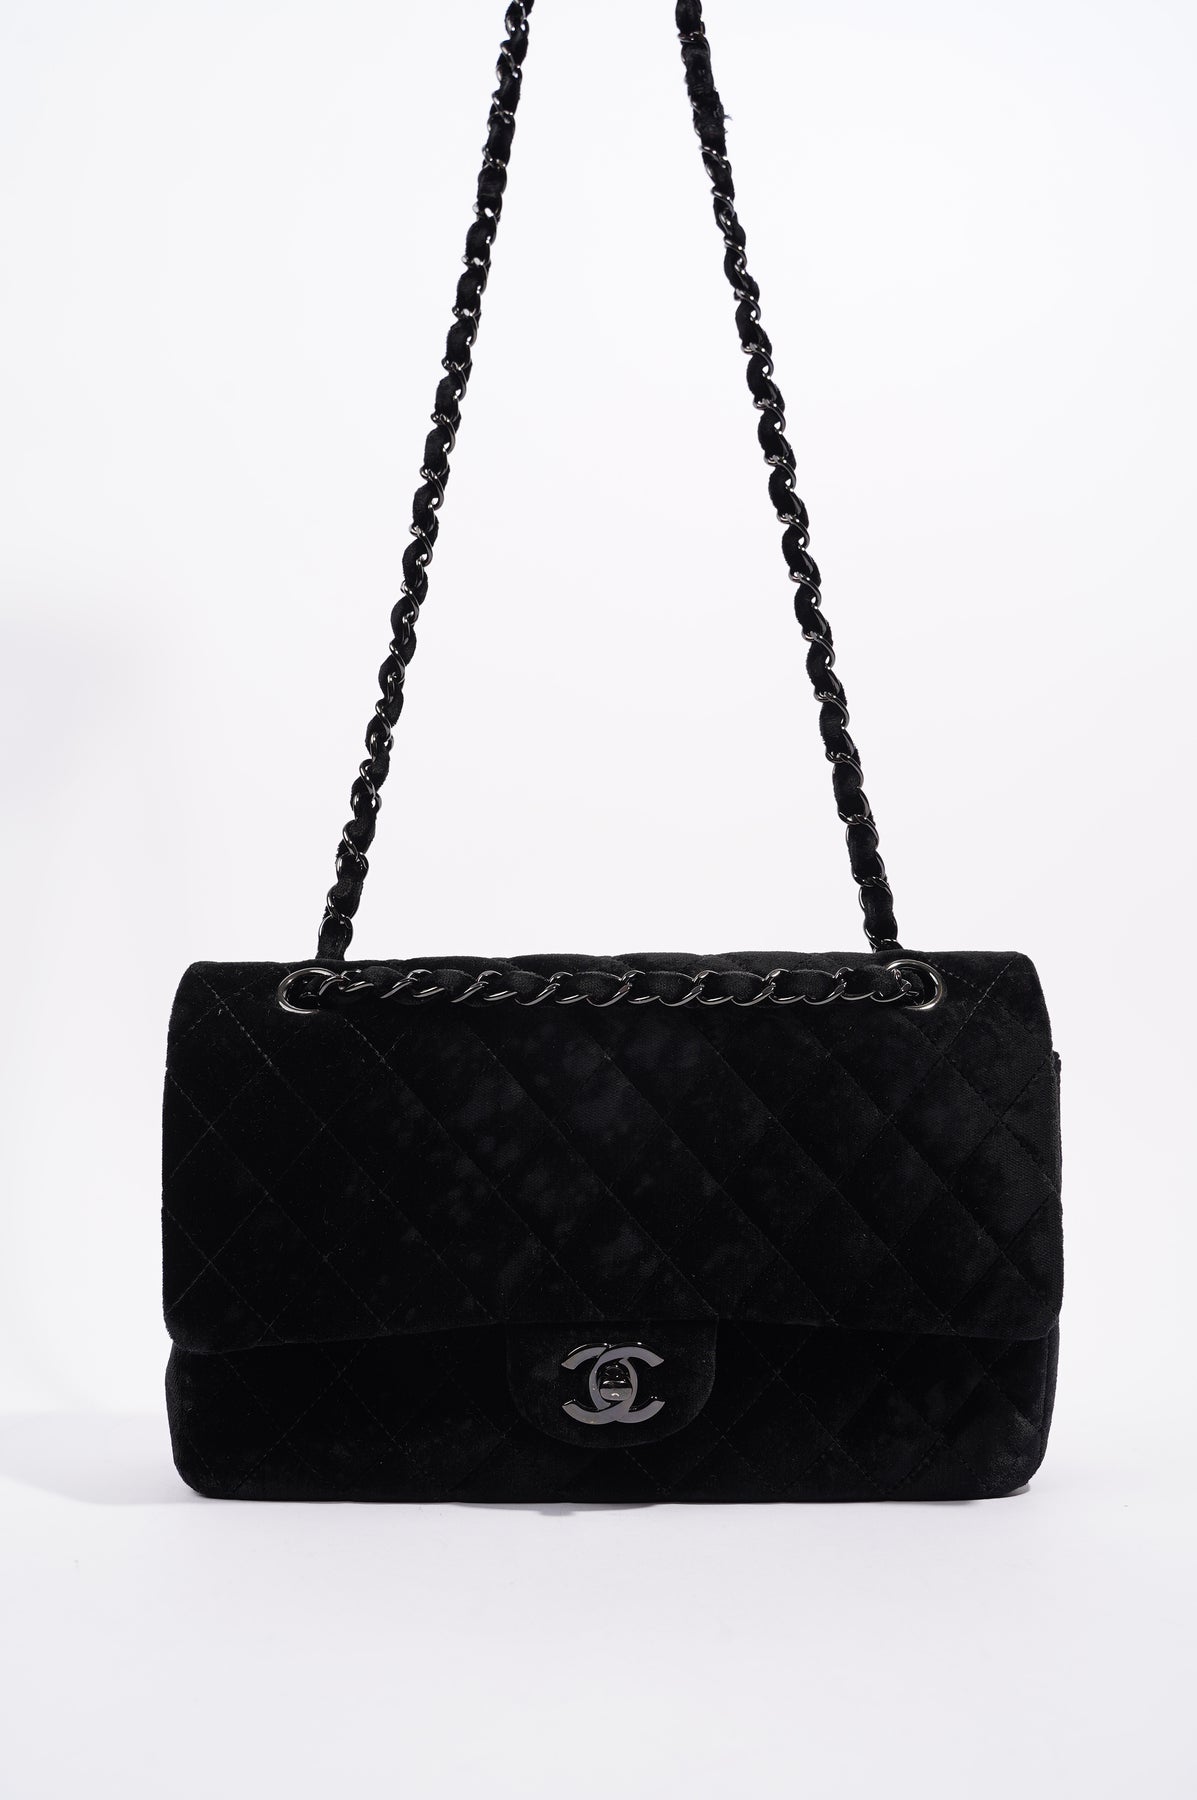 Chanel Medium Classic Flap Black Caviar Gold Hardware 30 - Luxury Shopping